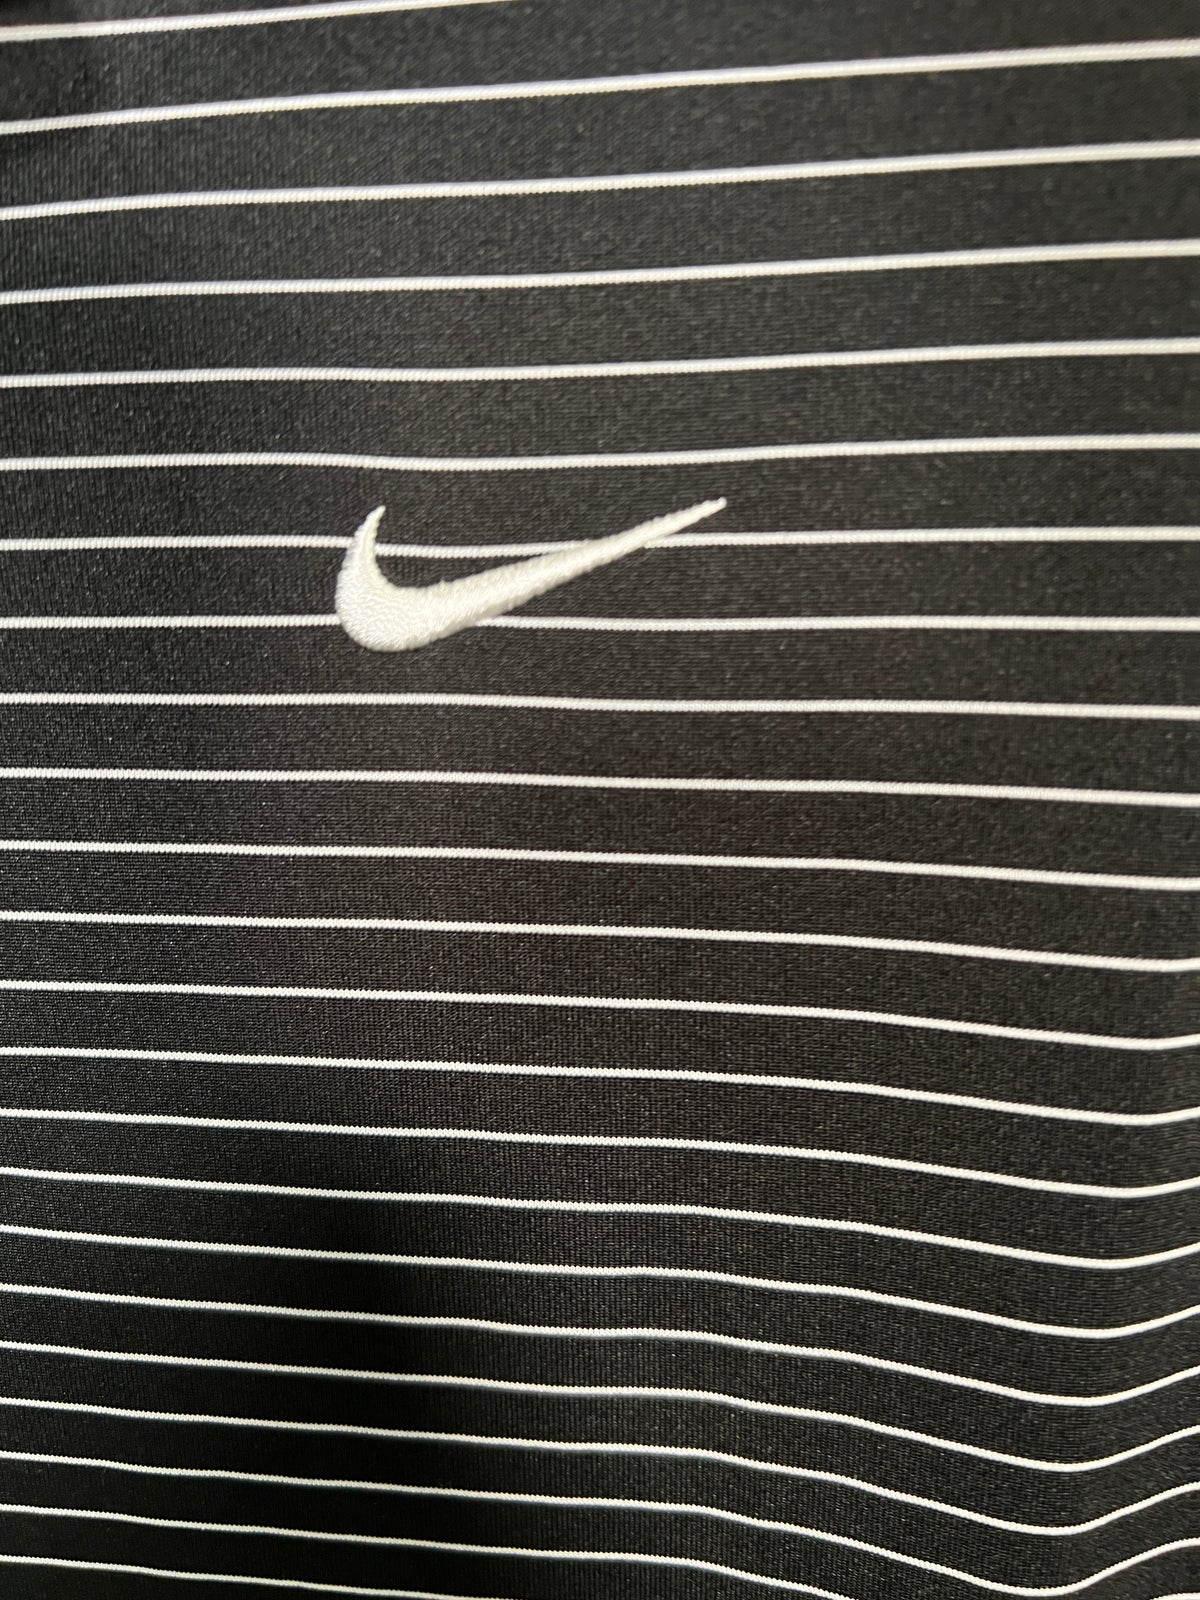 Polo t-shirt, Nike Golf , str. S